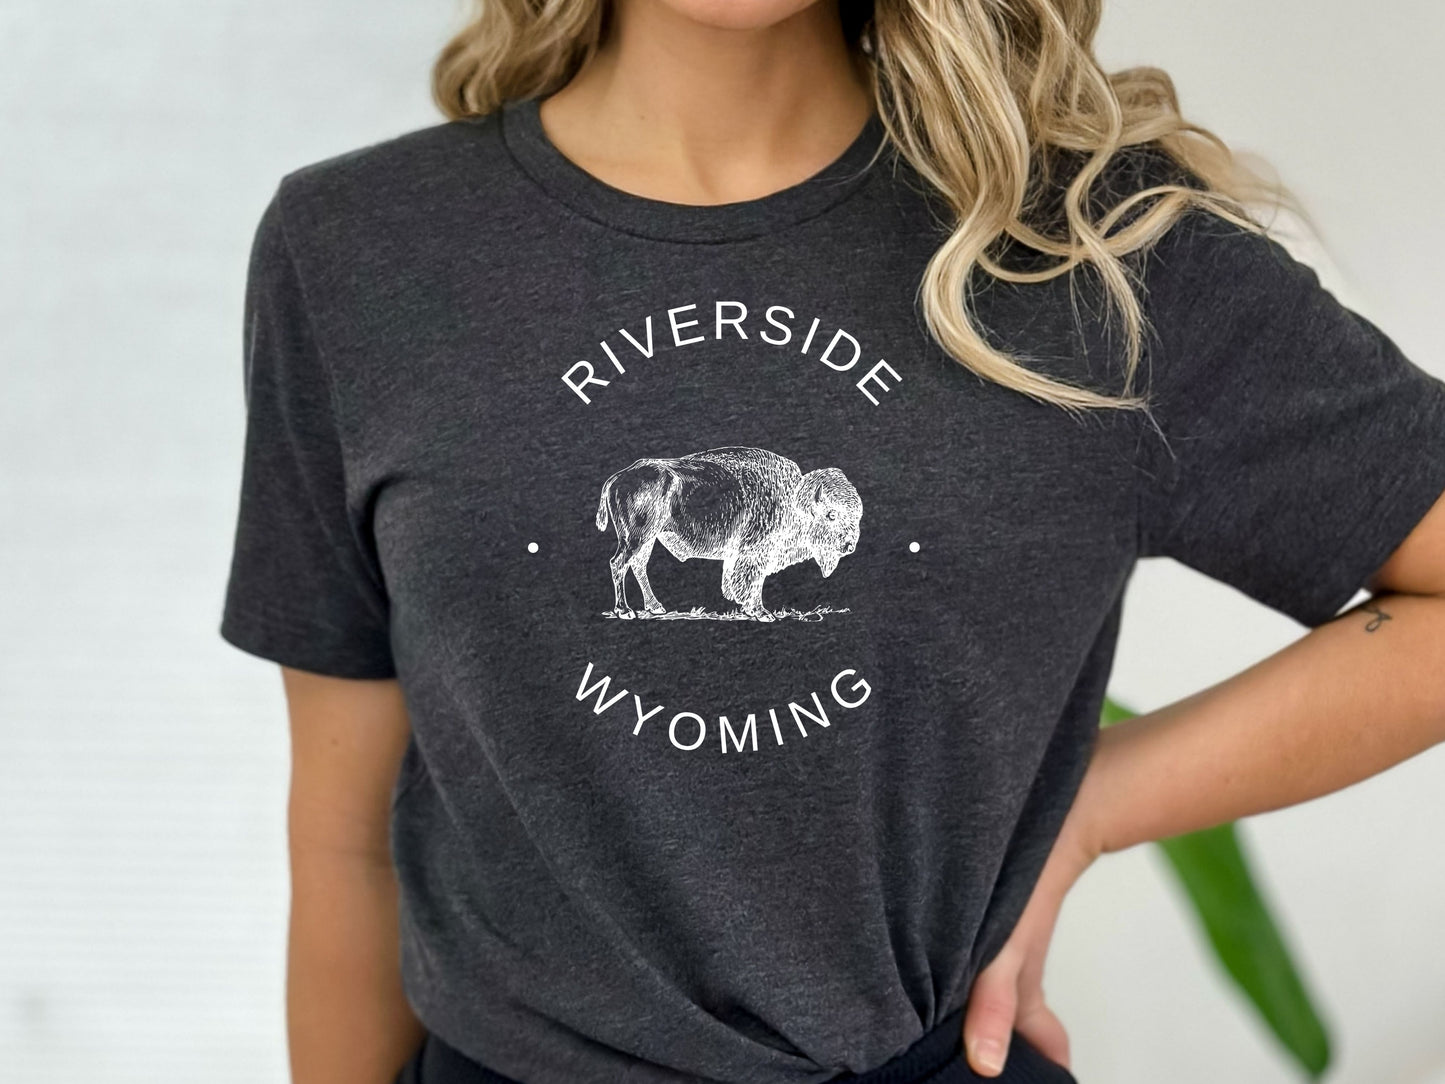 Riverside Women Wyoming T-Shirt